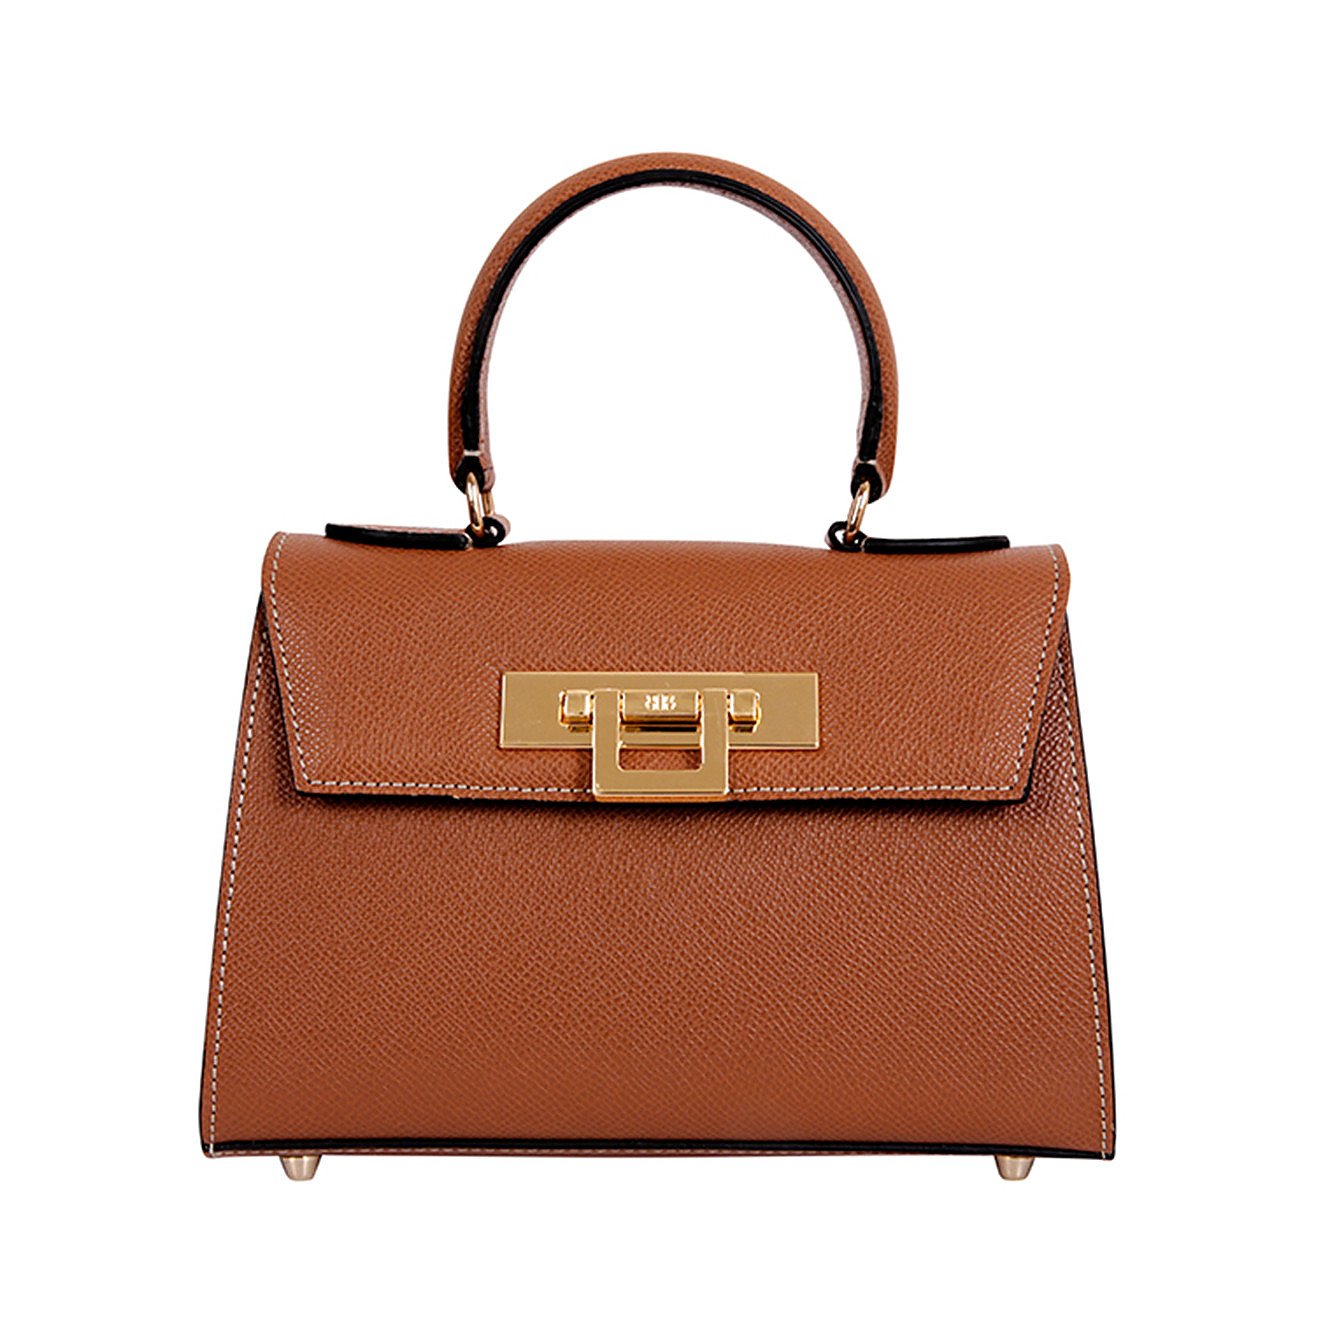 Lalage Beaumont Fonteyn Mignon - Palmellato Leather Handbag - Tan